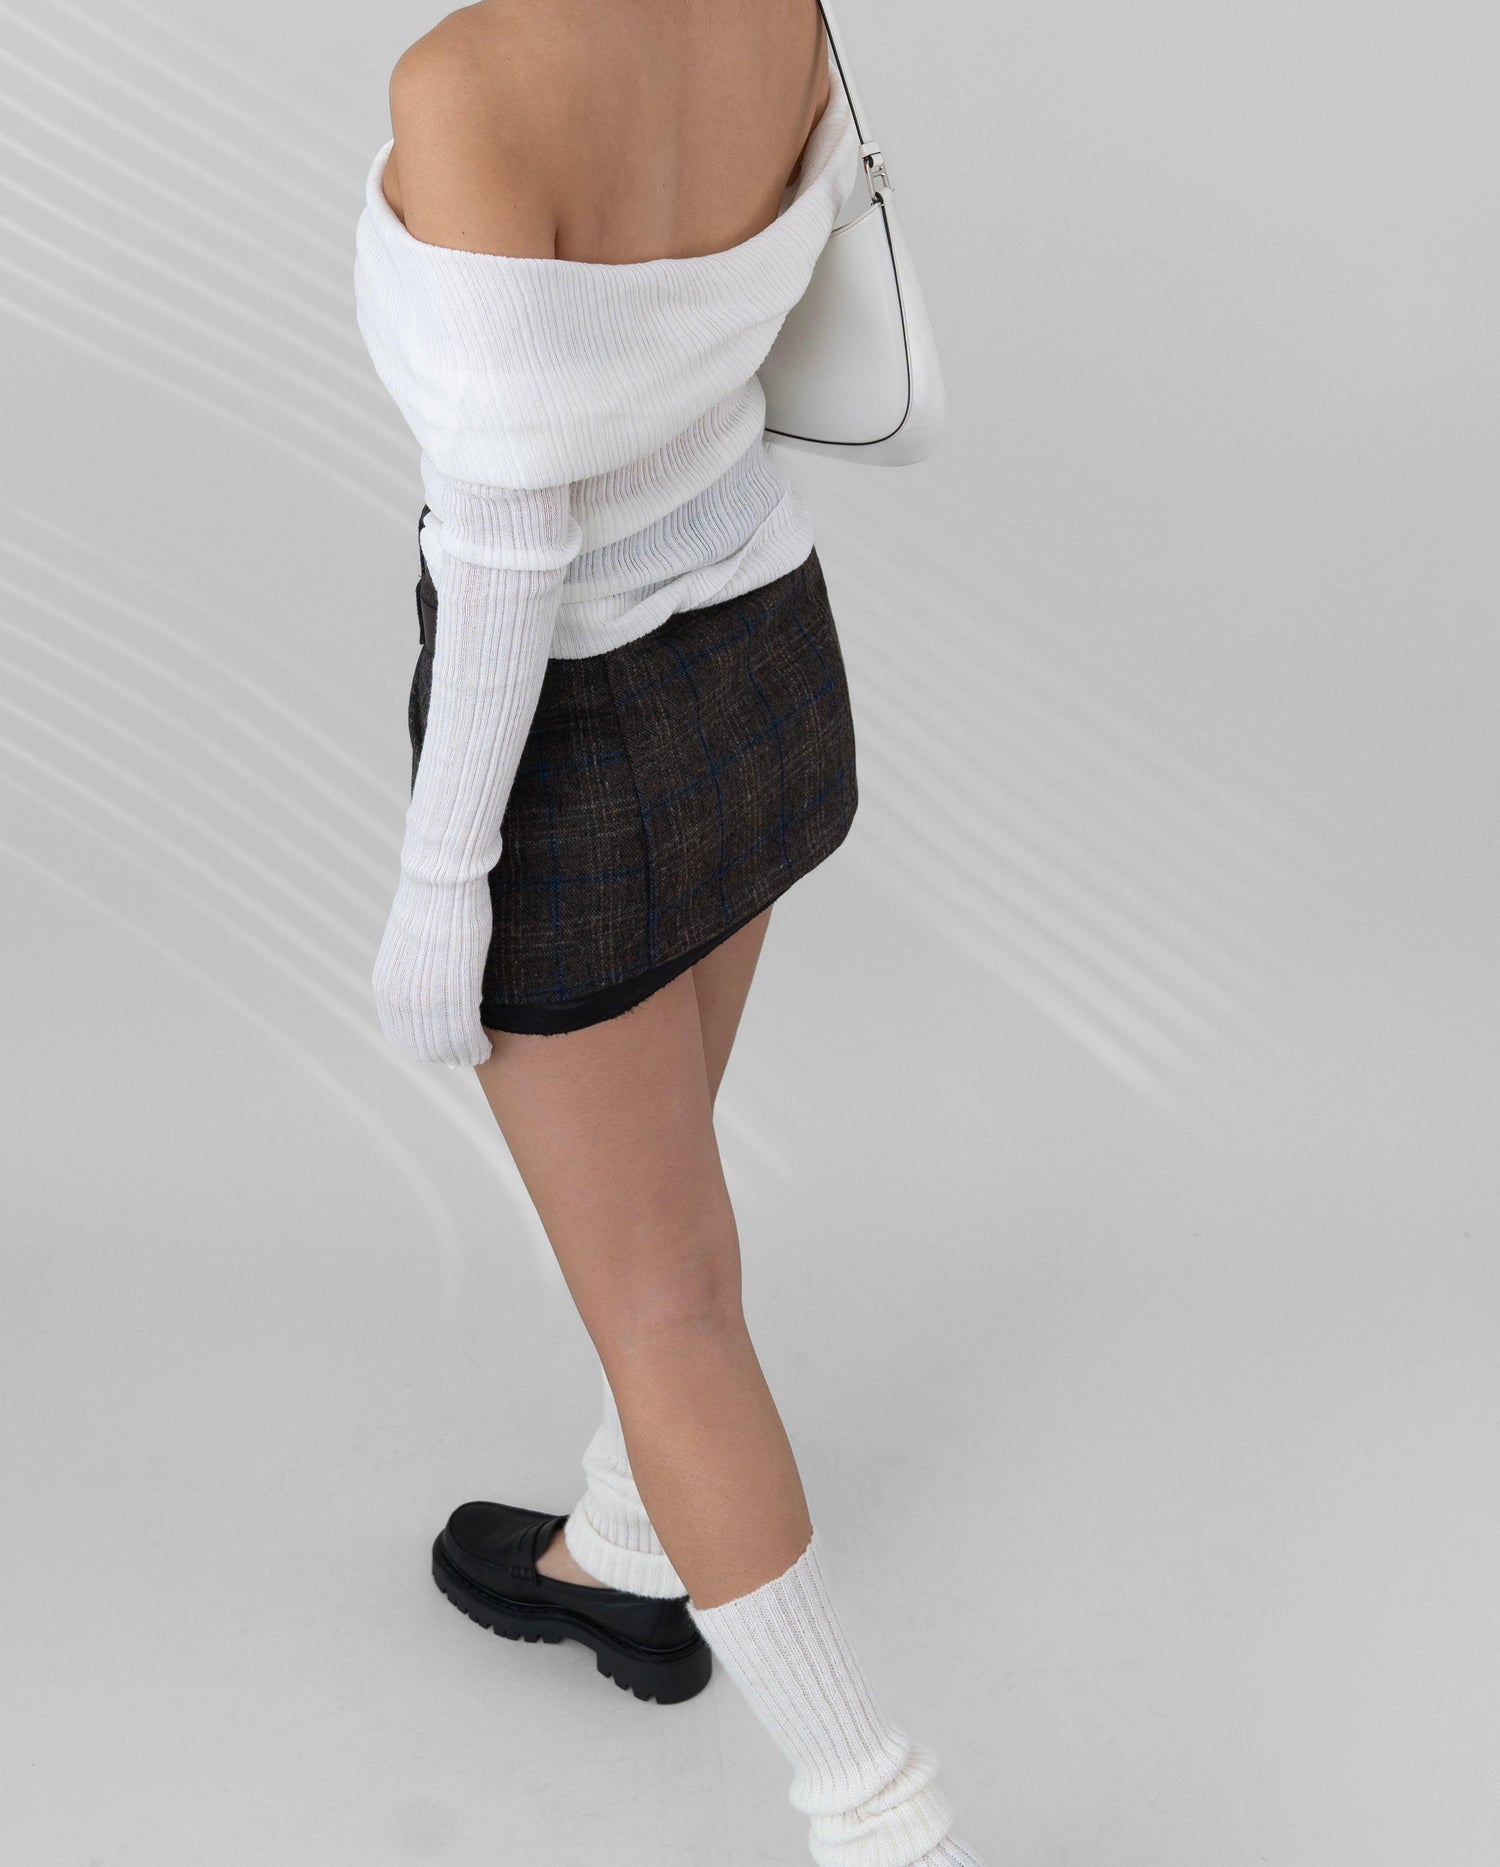 Rohan Double Belted Plaid Mini Skirt / Dark Brown - The Bekk